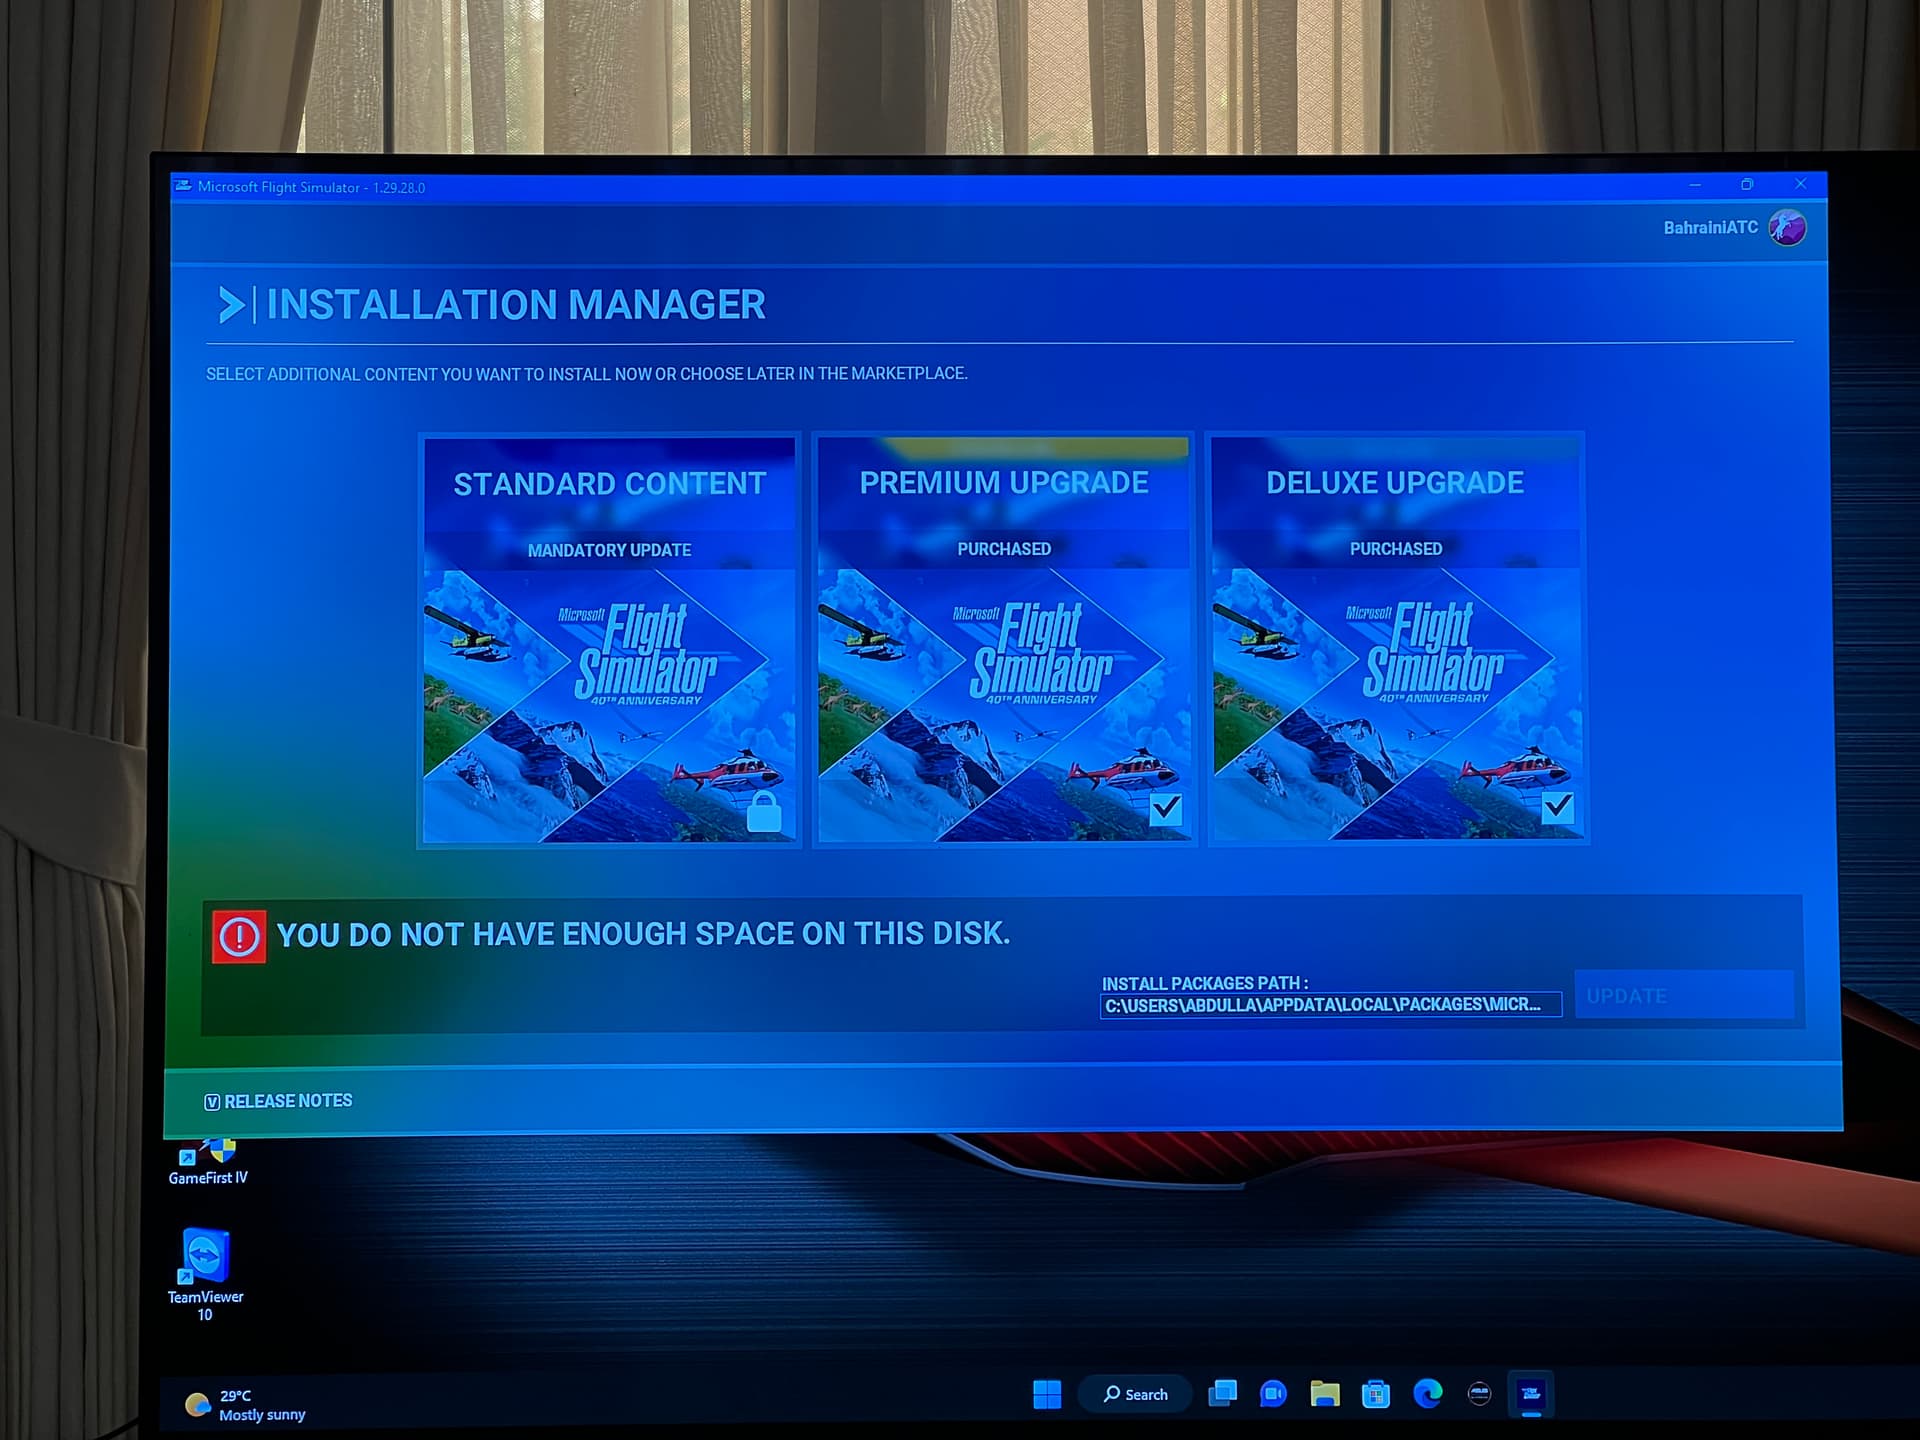 I can't download Microsoft flight sim 40 anniversary edition. It